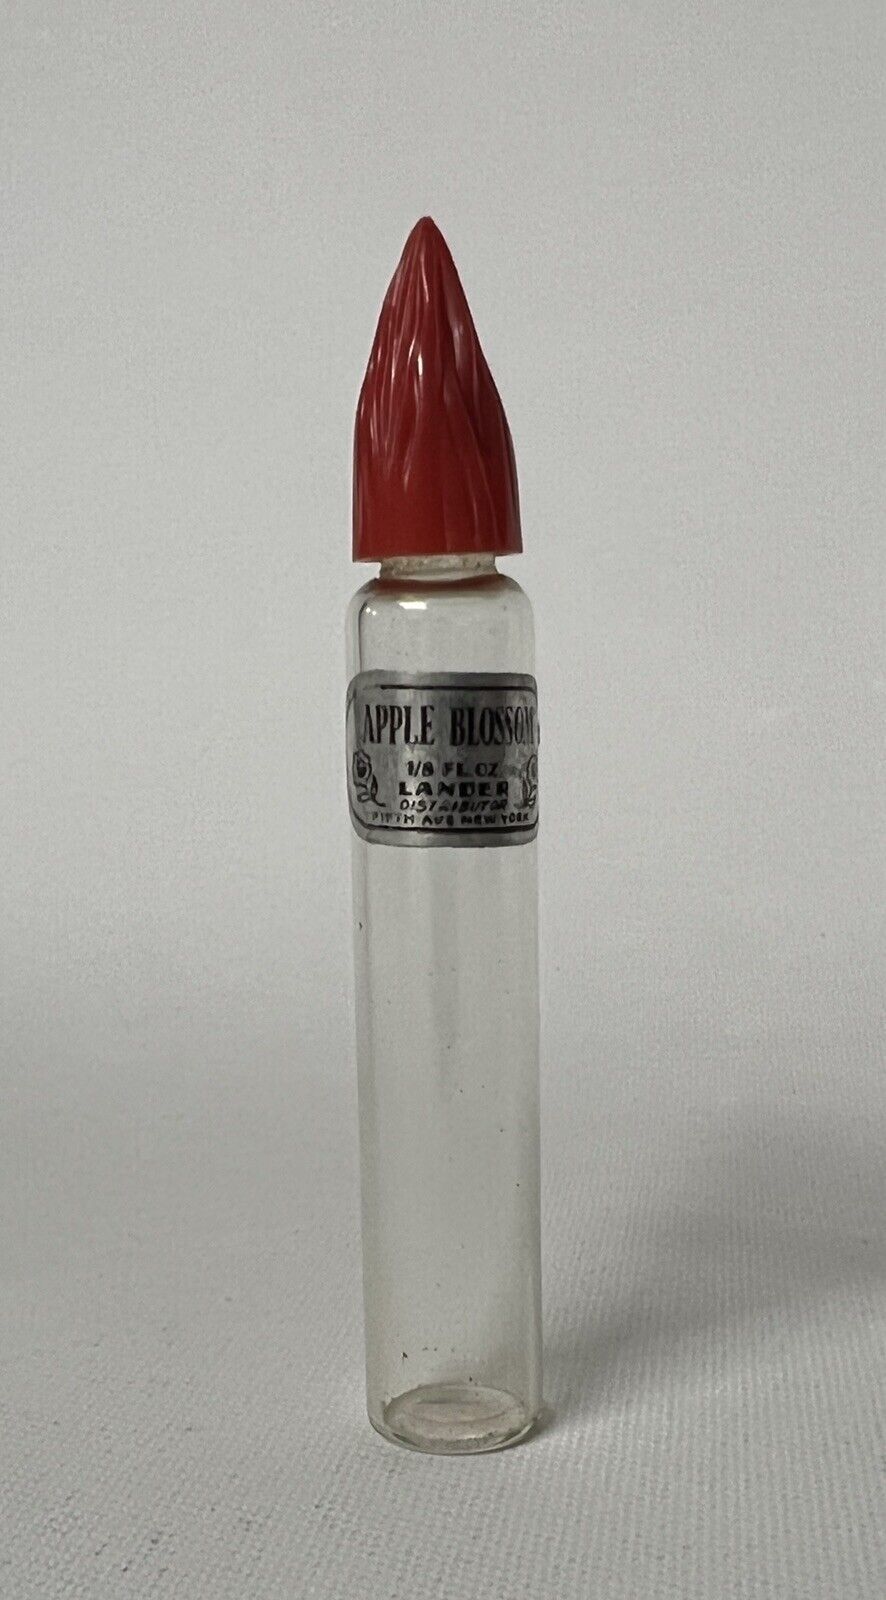 Vintage Lander Apple Blossom 1/8 Fl Oz Miniature Splash Perfume Bottle EMPTY